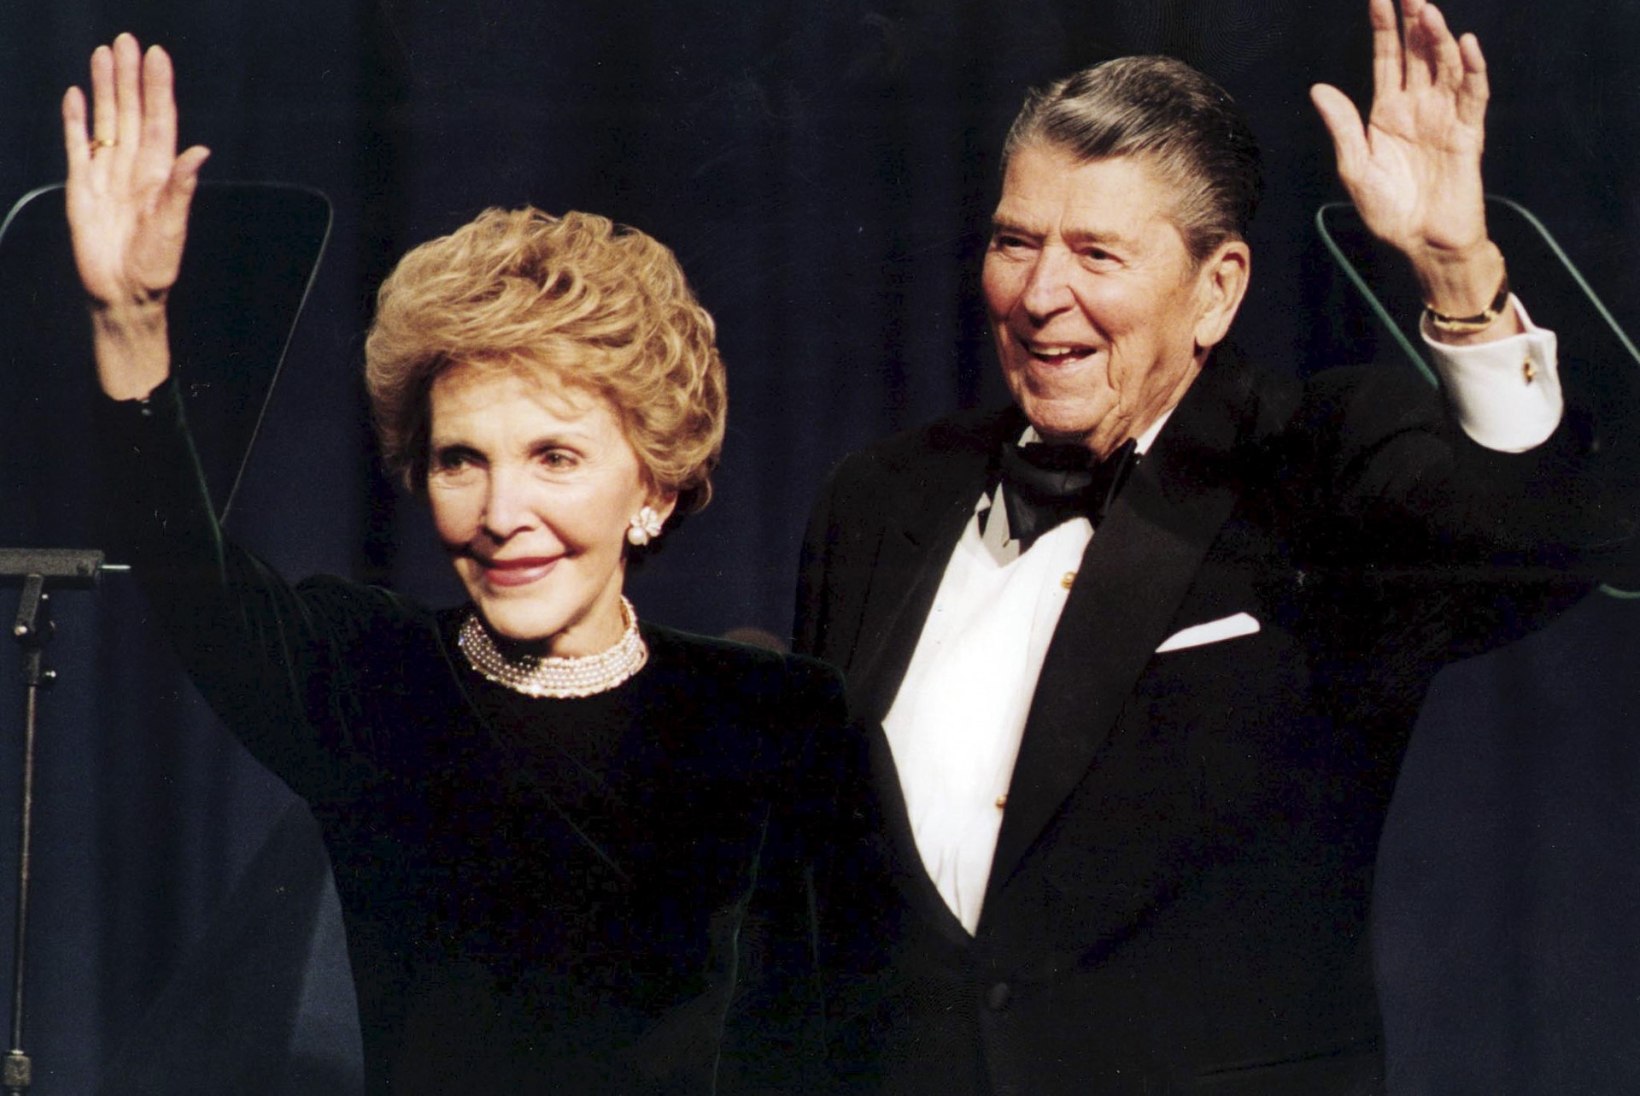 Suri USA endine presidendiproua Nancy Reagan